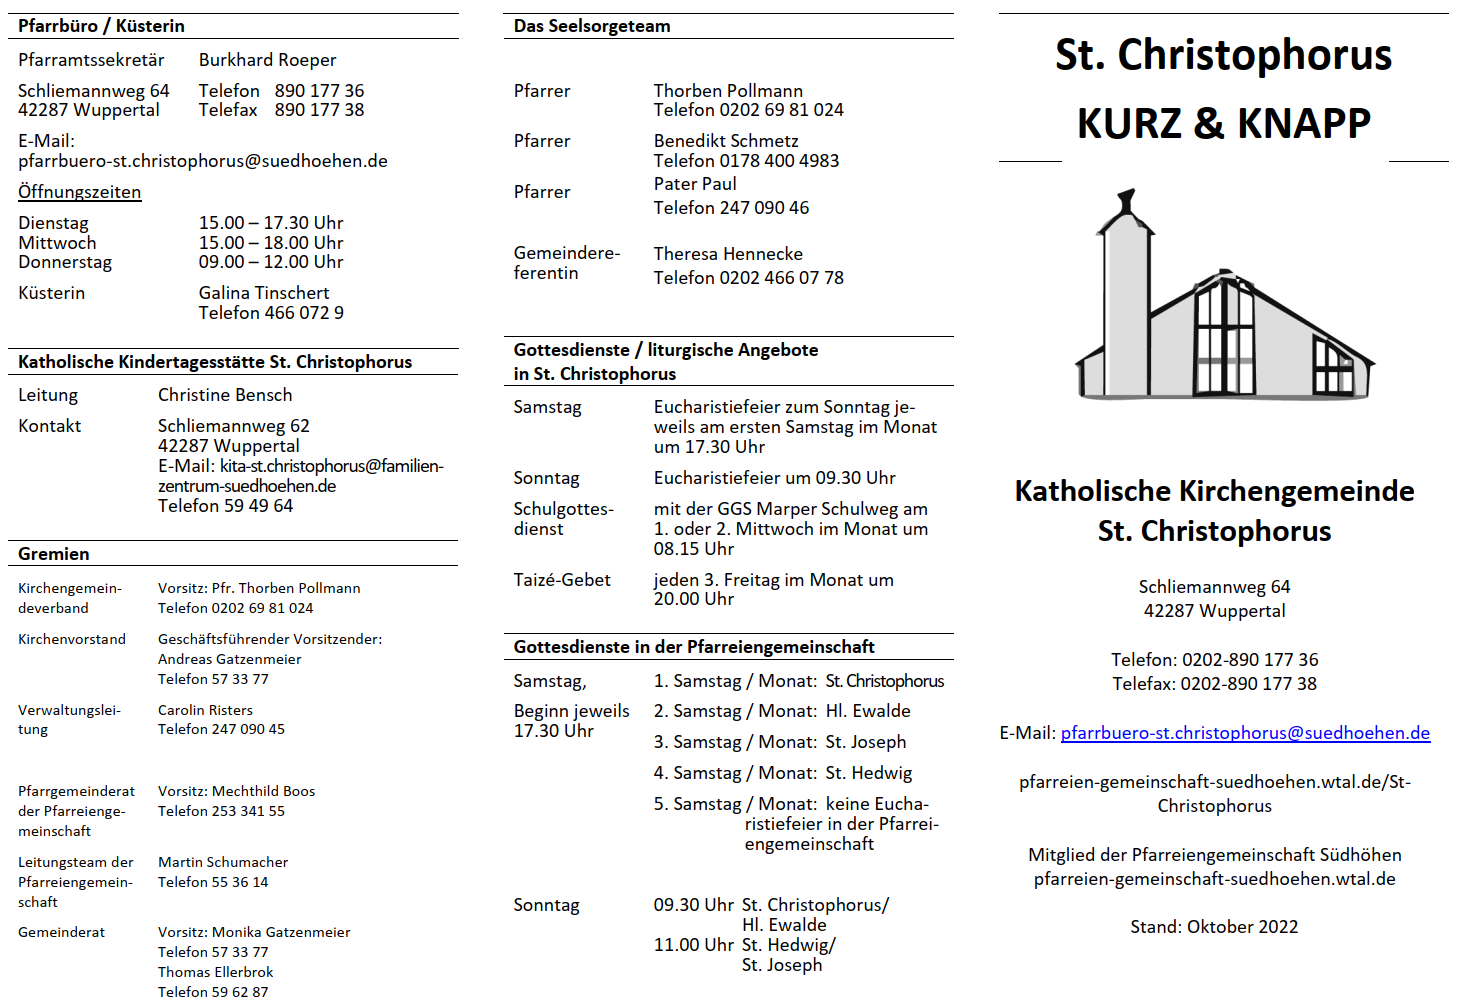 St. Christophorus - kurz & knapp